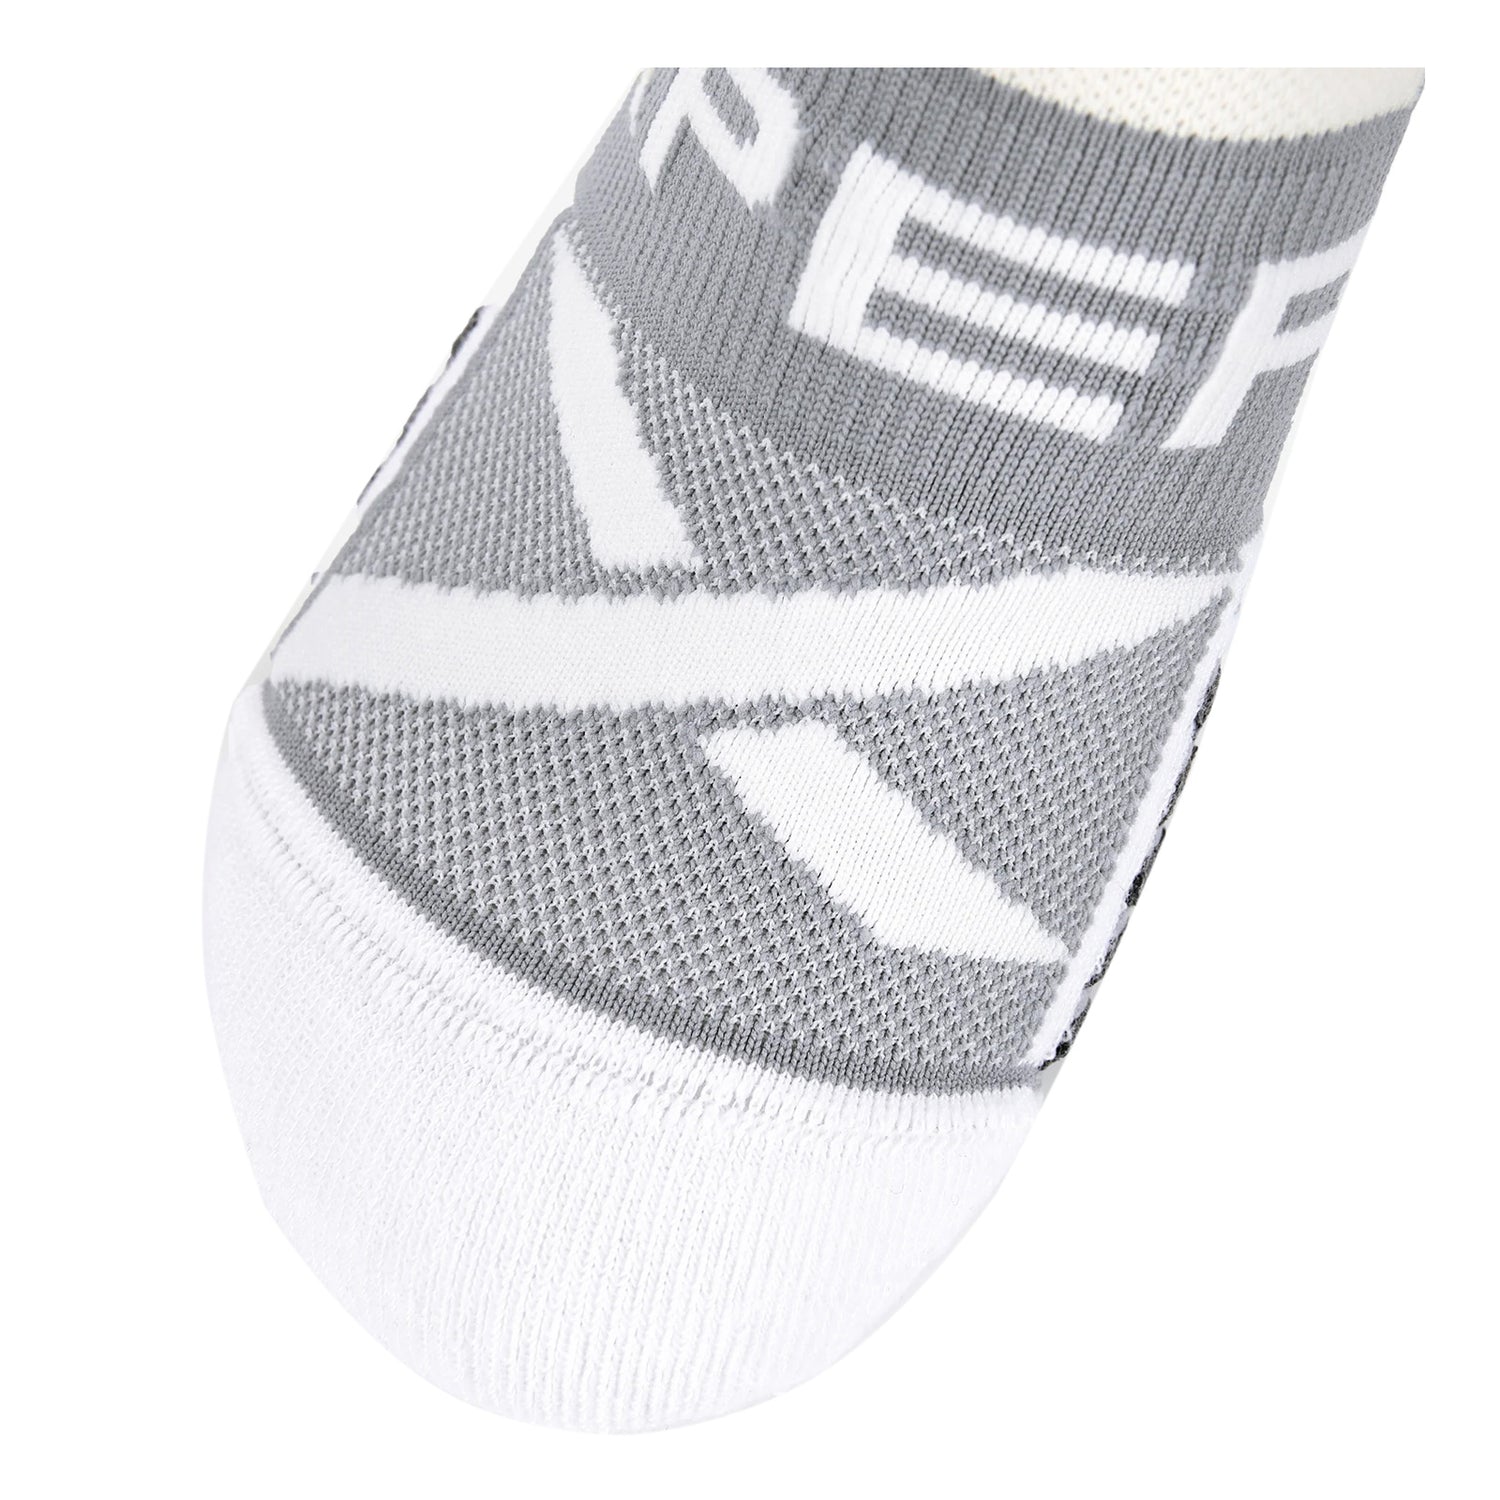 Peltz Shoes  Unisex Thorlo Socks Experia Ultra Light Padding Tennis No Show Tab Socks - 1 Pair White EXTN00-WHT